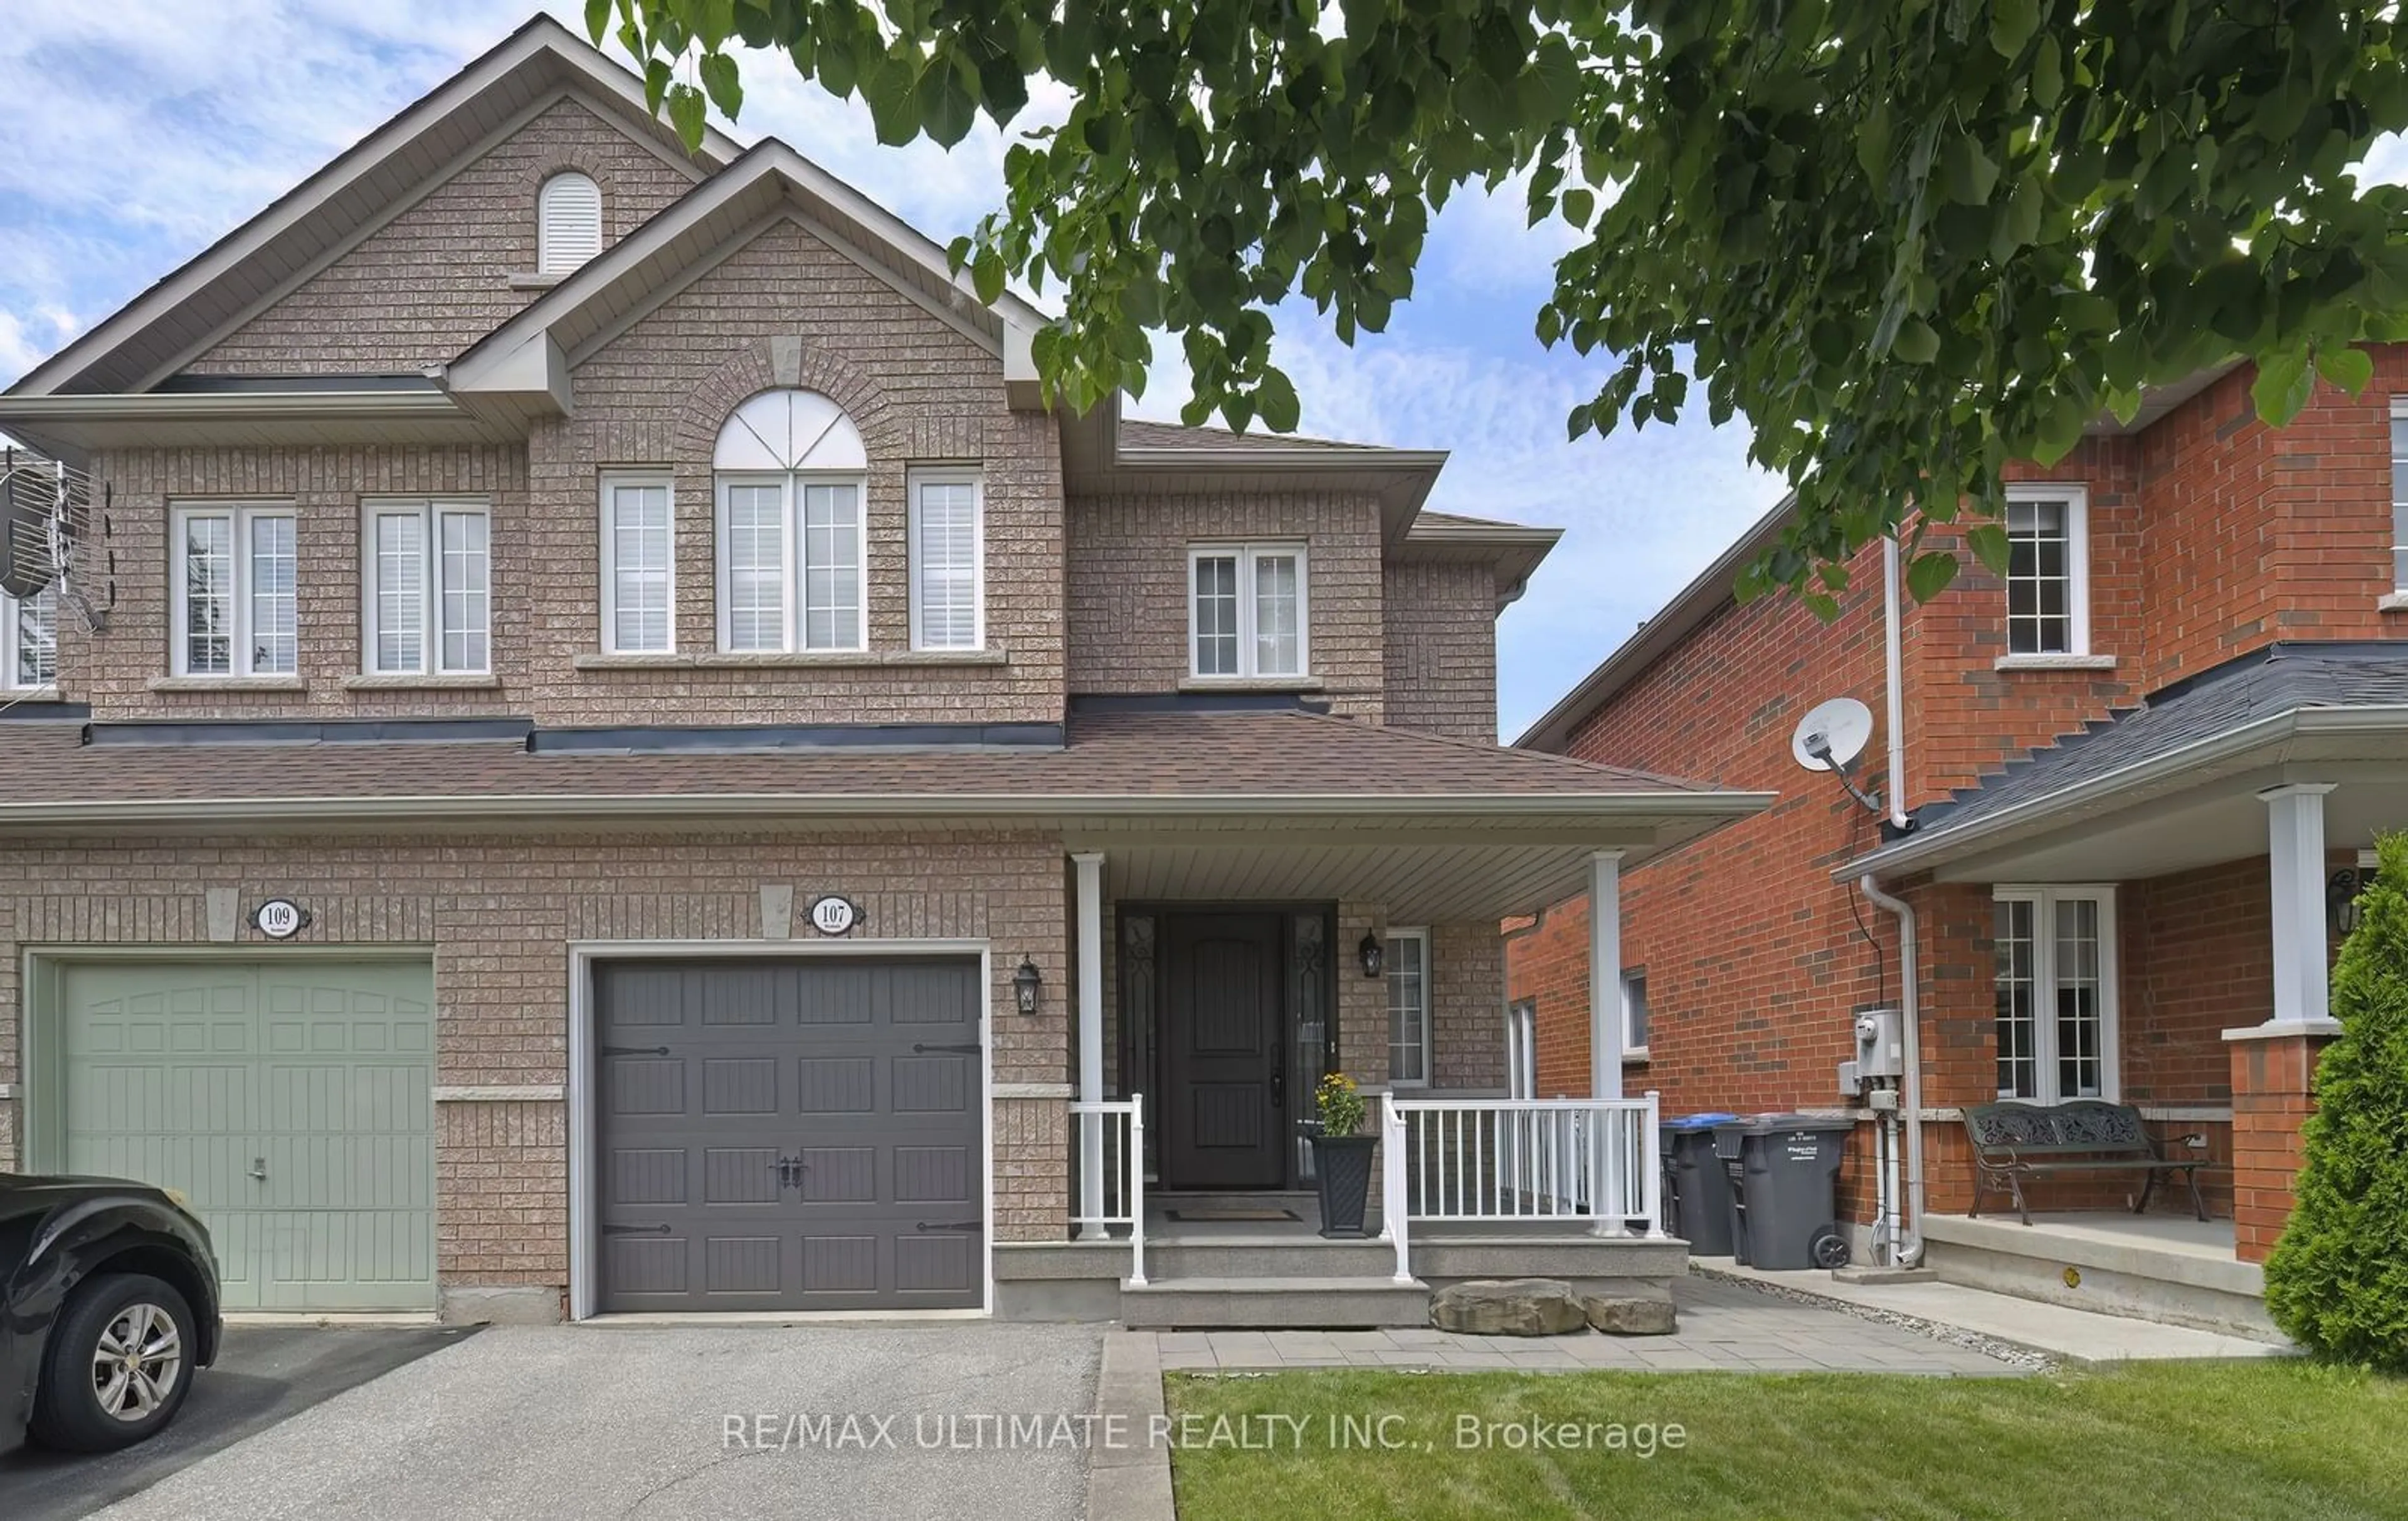 Home with brick exterior material for 107 Echoridge Dr, Brampton Ontario L7A 3P8